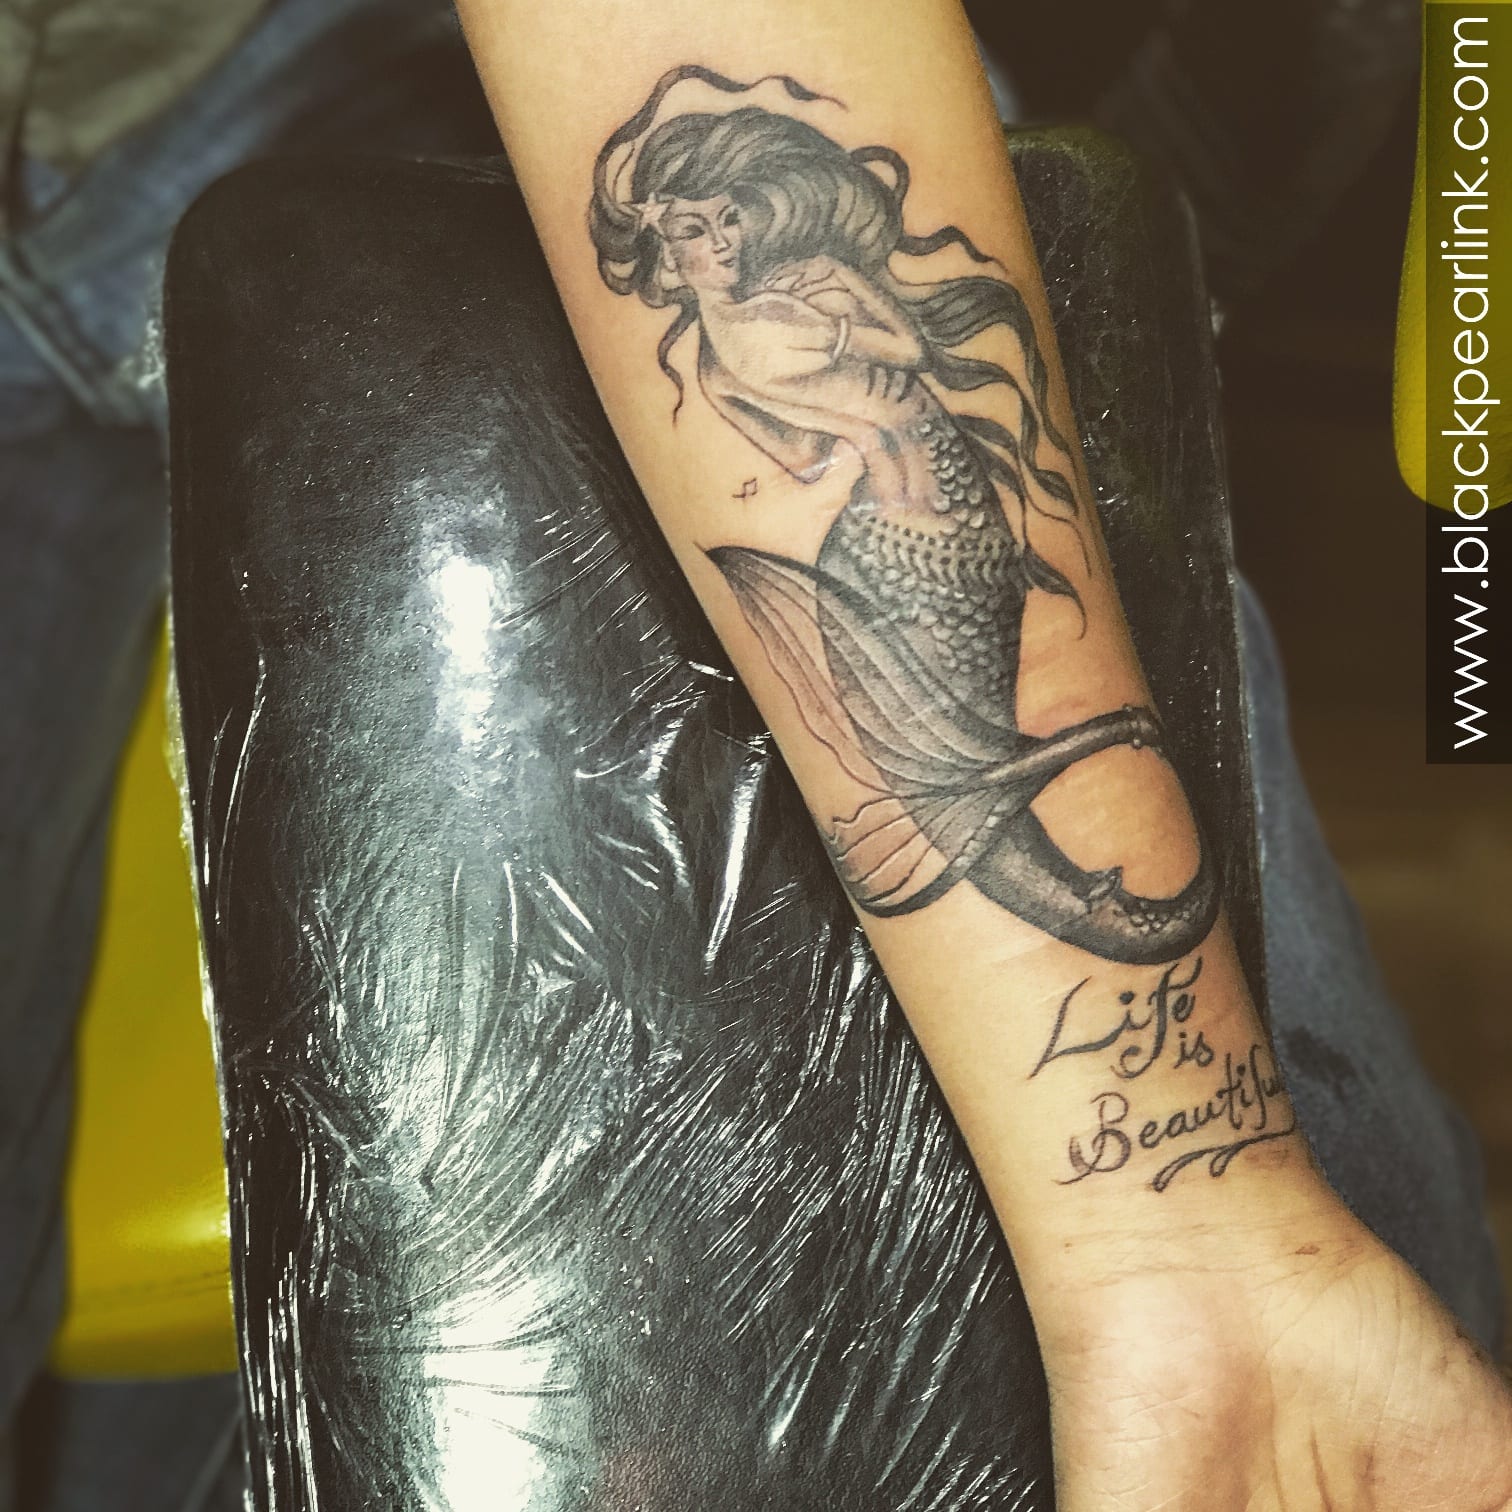 Top 5 scar cover-up tattoos done at Black Pearl Ink, Mumbai